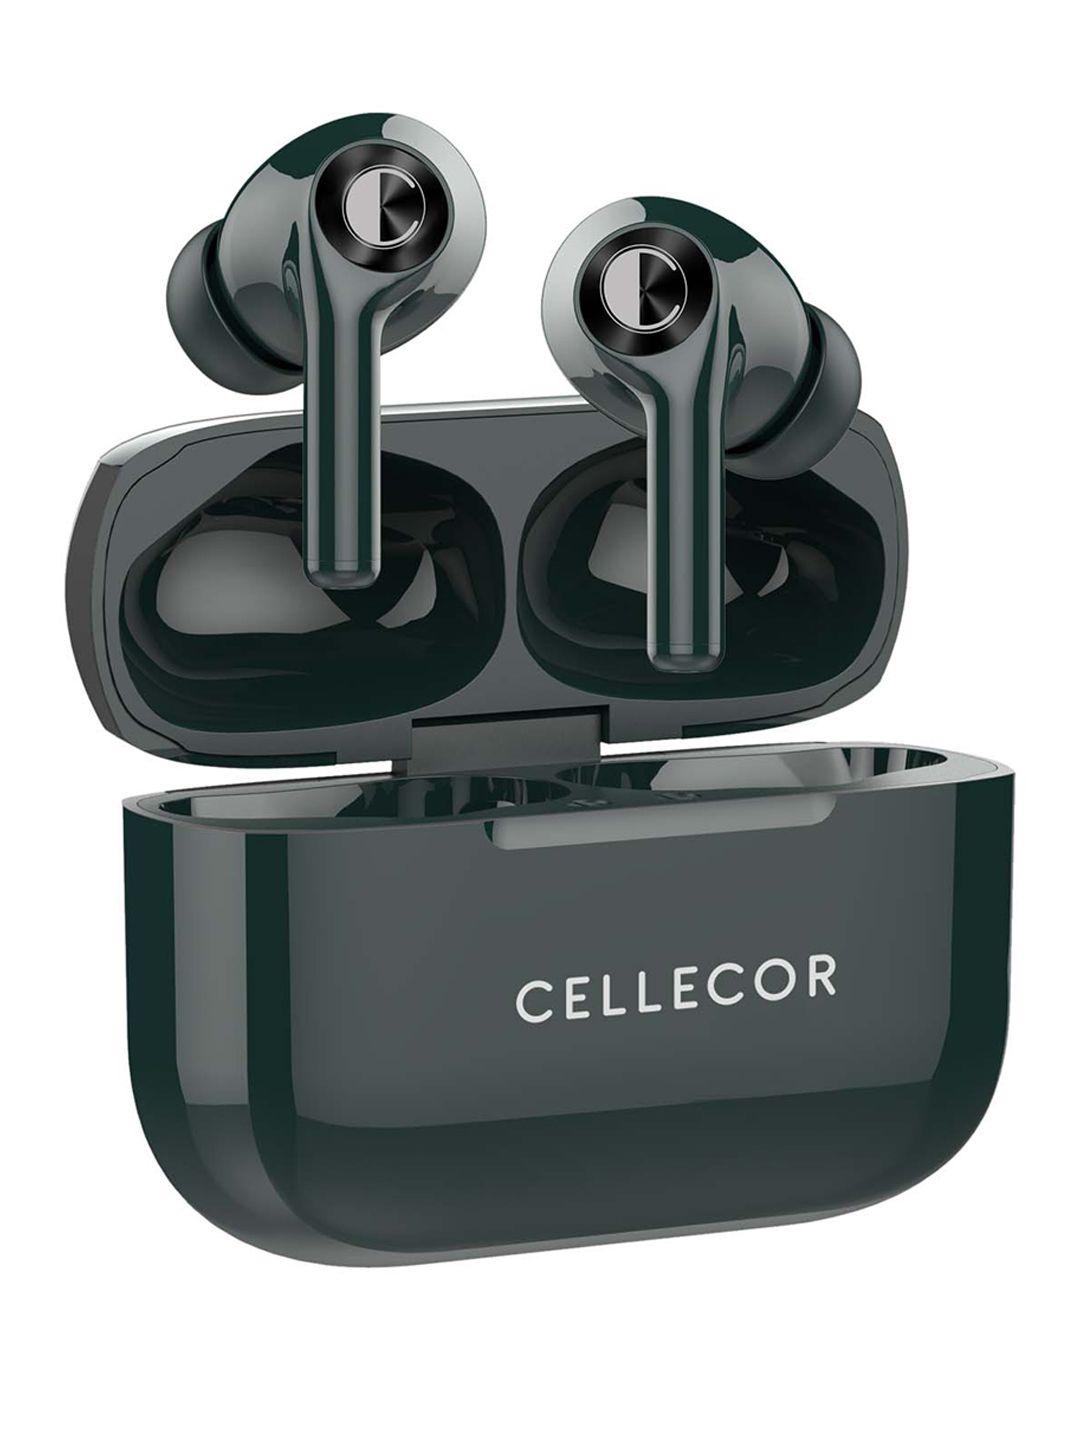 Cellecor Bropods CB22 True Wireless EarPods